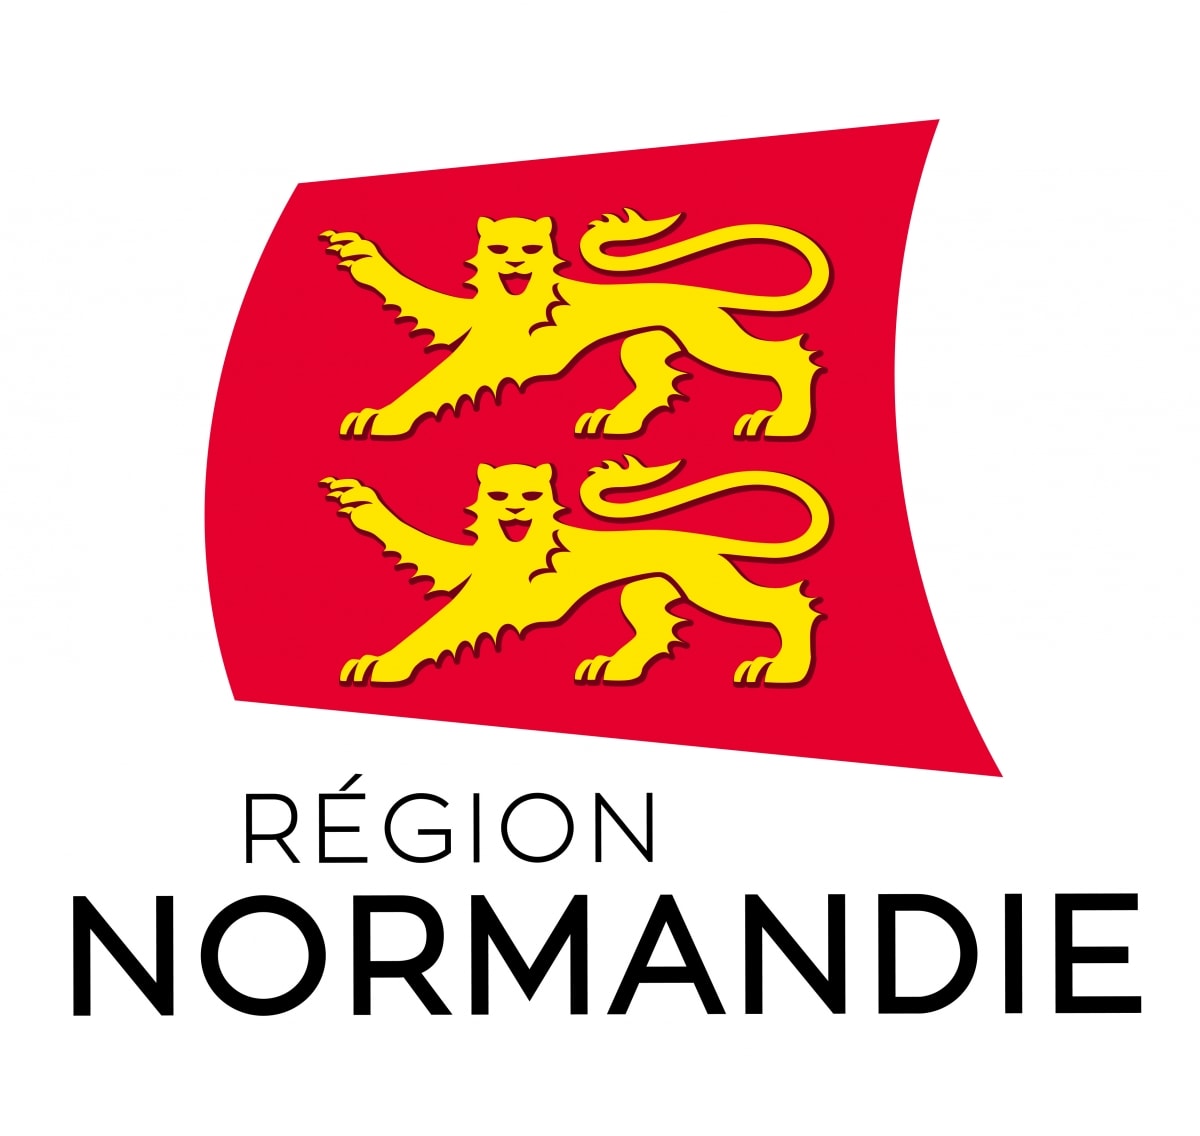 logo_r.normandie-portrait-cmjn_0